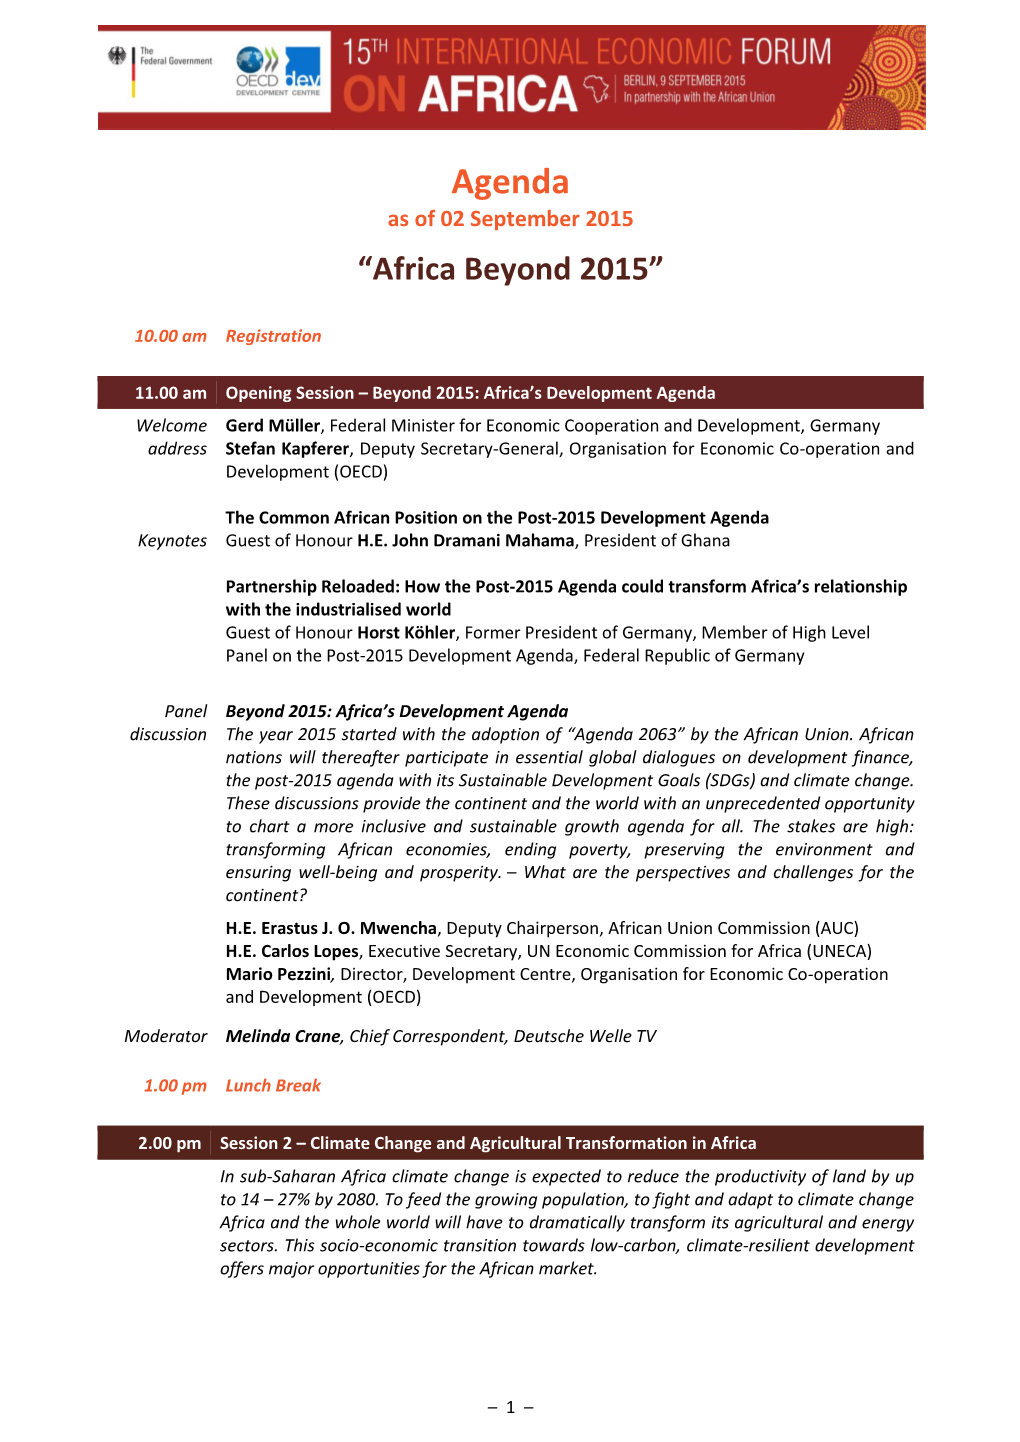 Africa's Development Agenda